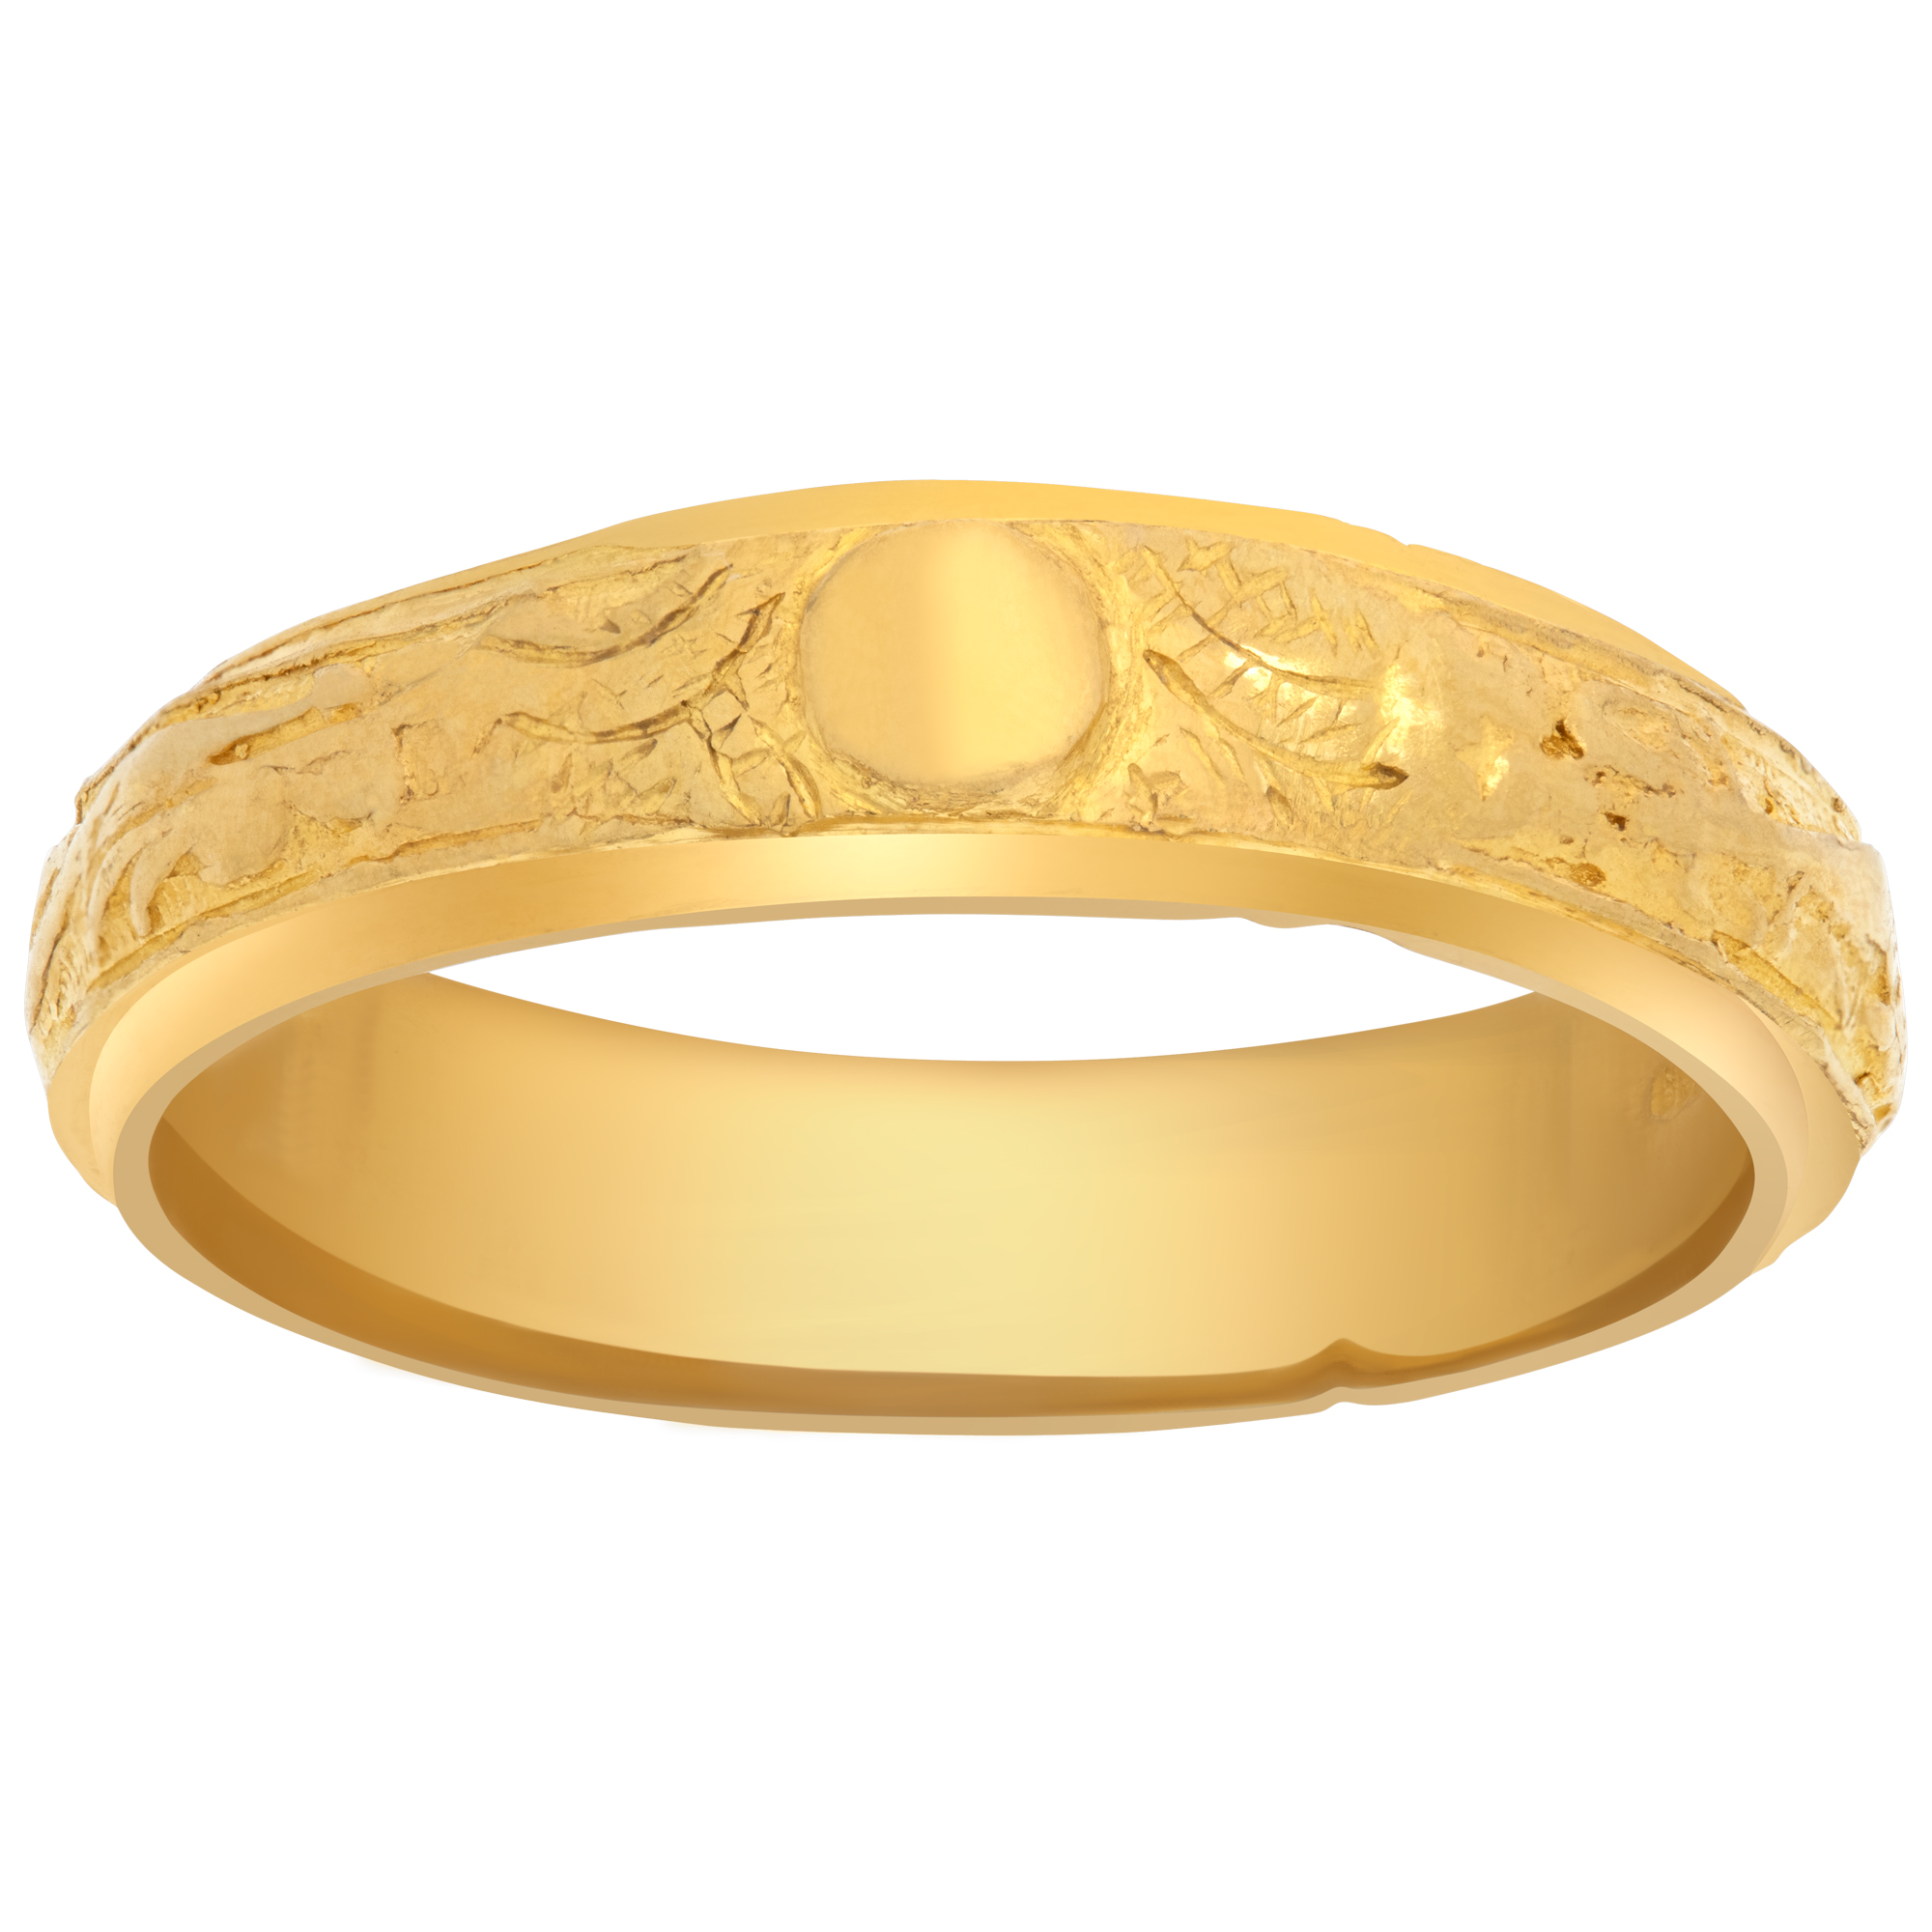 Mens 24k yellow gold ring. Size 10.75 image 1